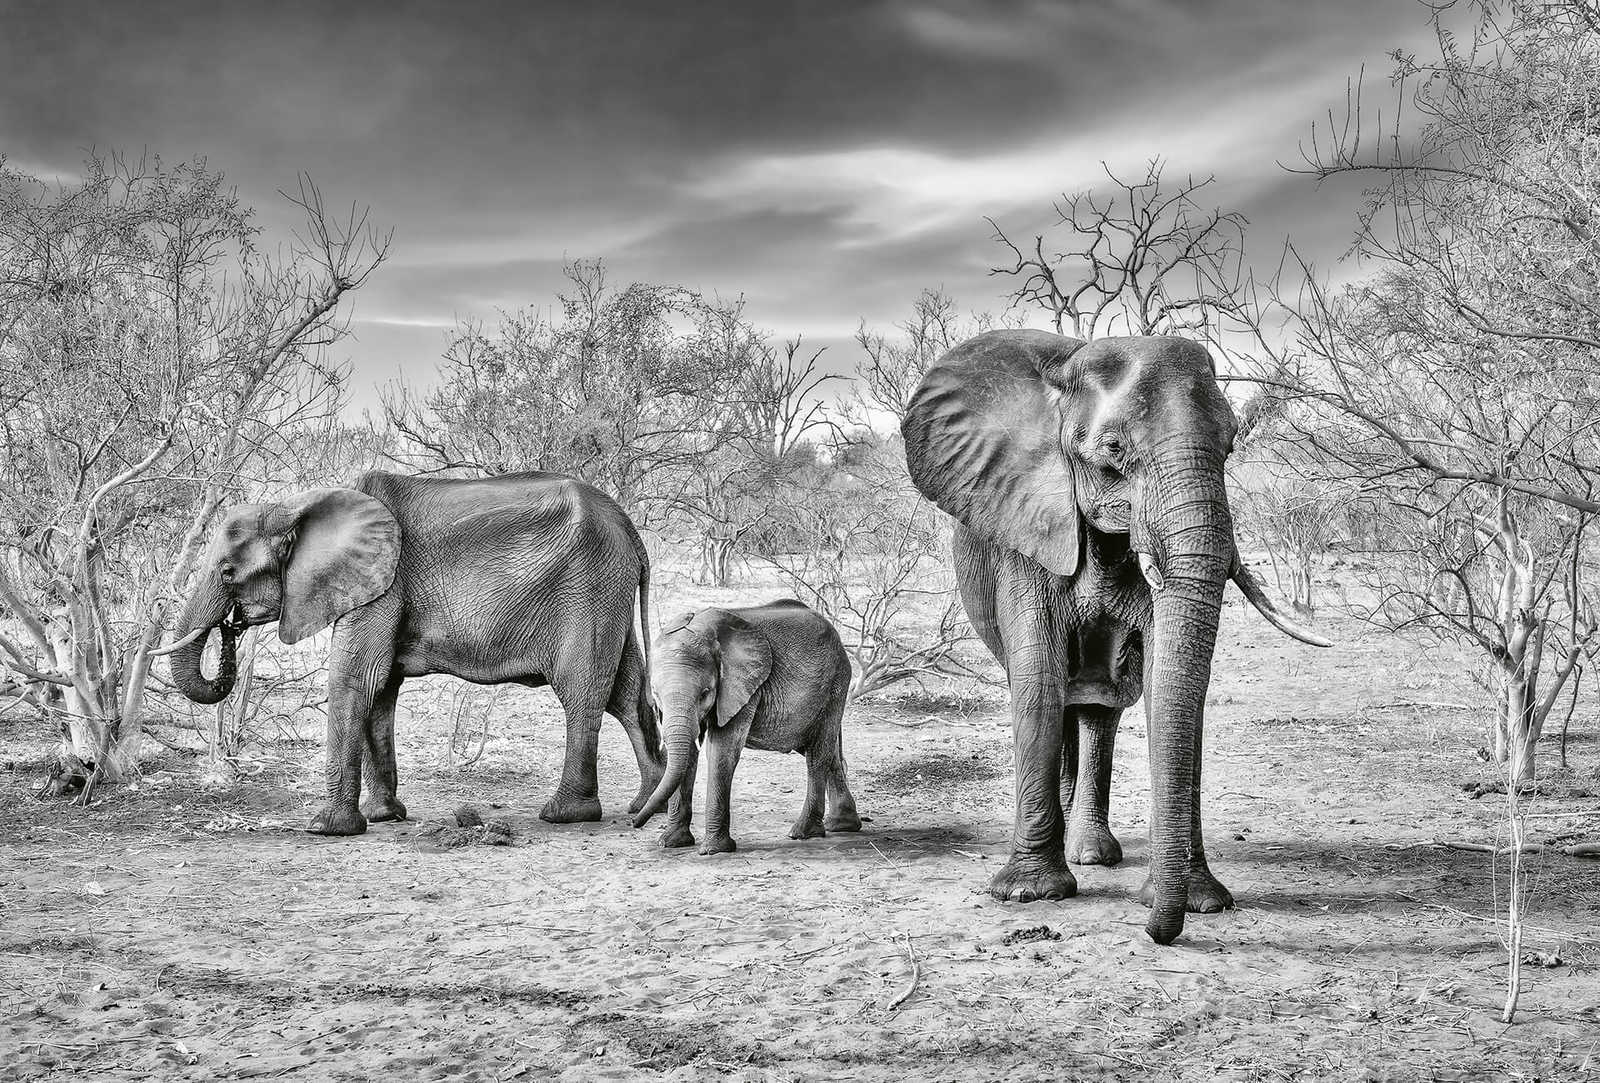         Photo wallpaper elephants family - grey, white, black
    